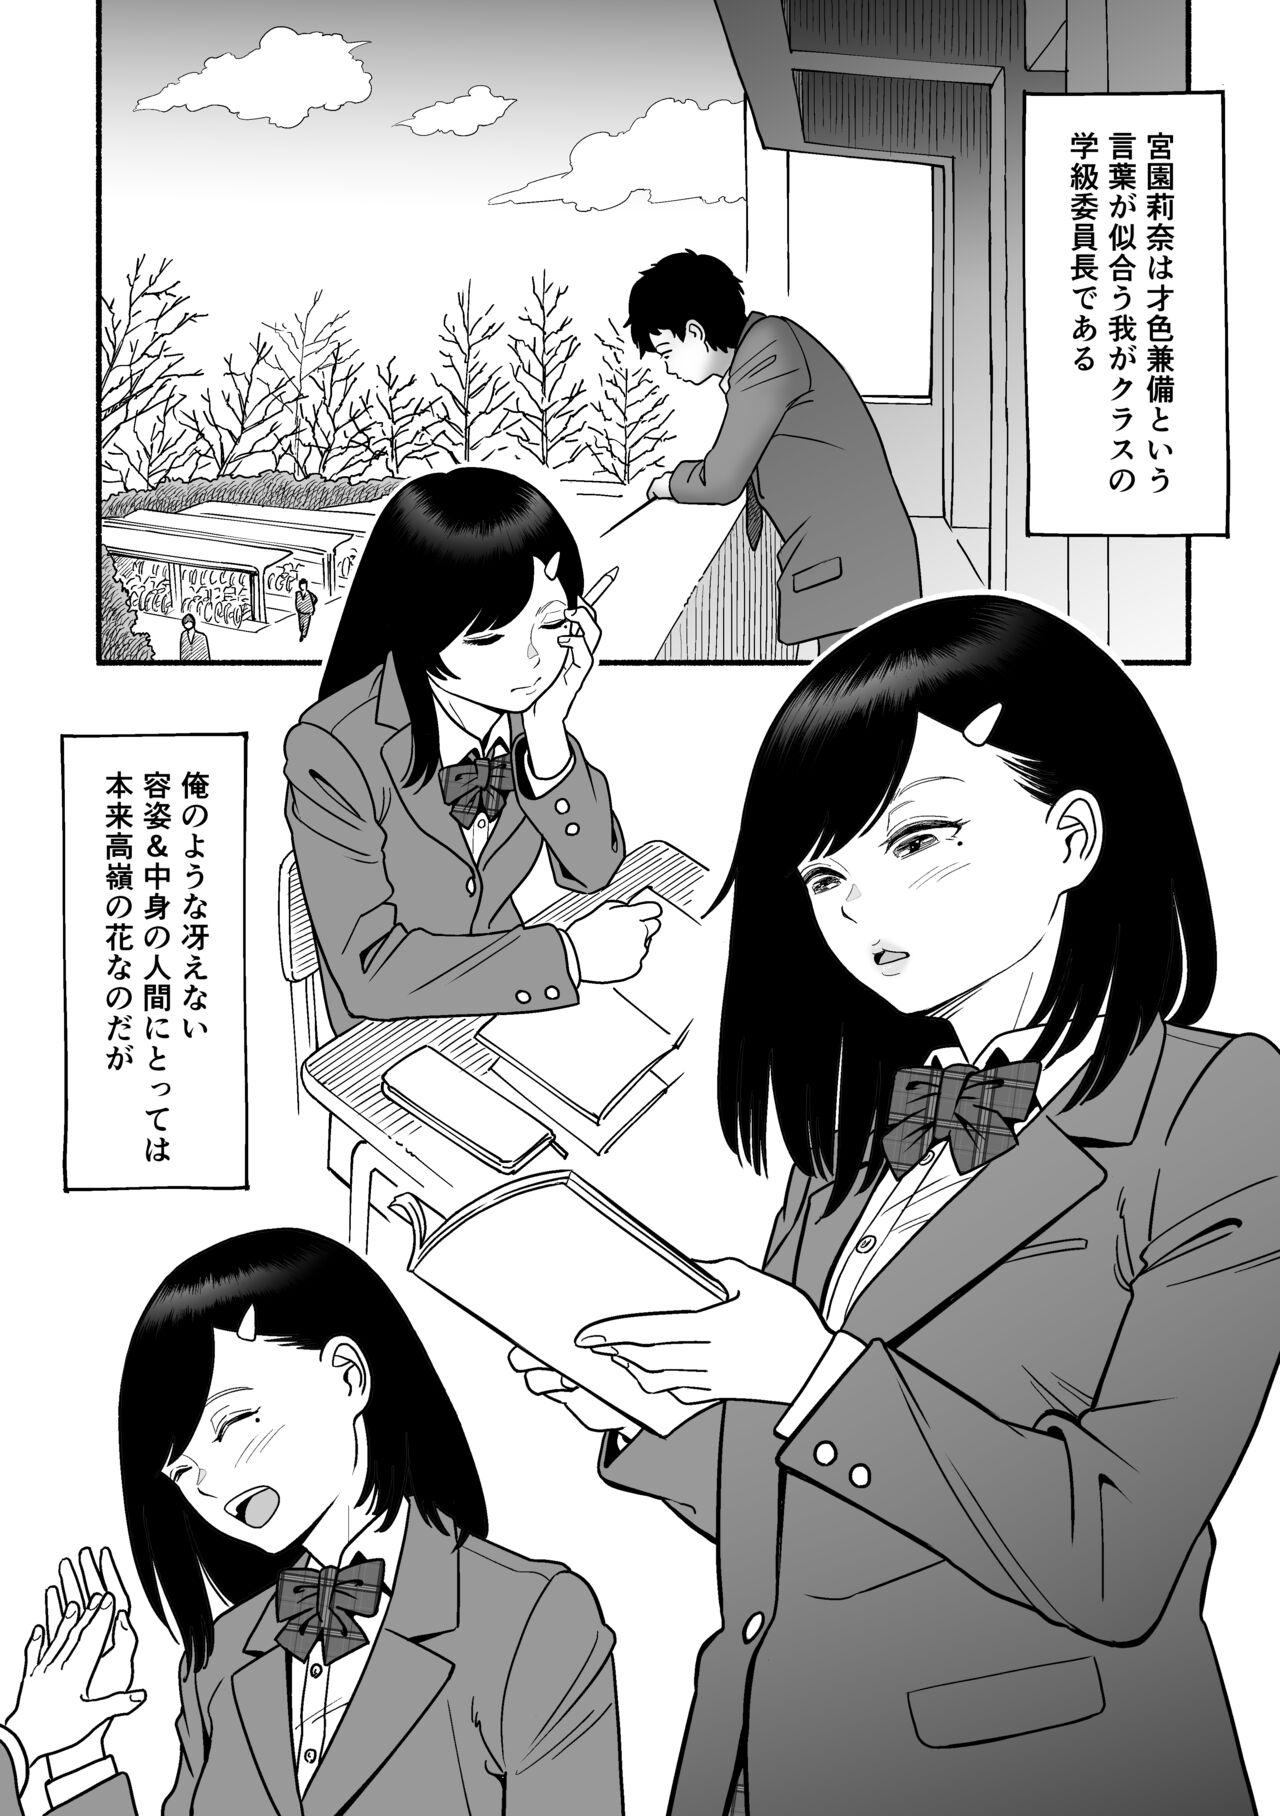 Plug Sarani yawarakana Miyazono - Original Work - Page 3